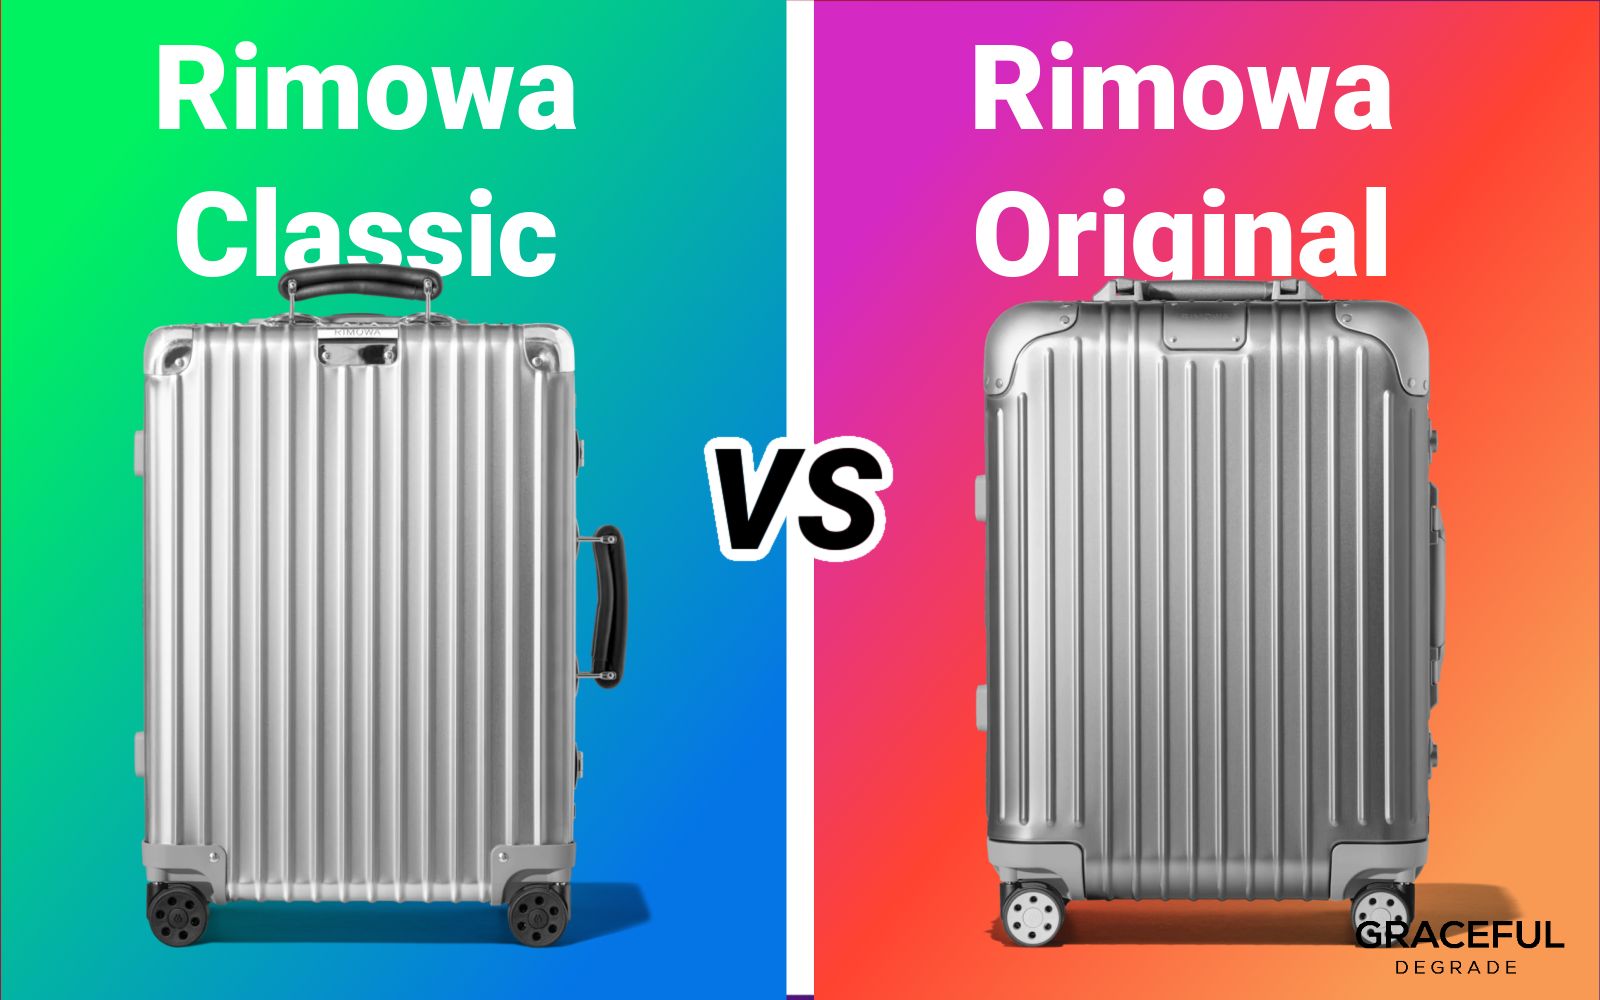 Original Check-In L Twist Suitcase in Silver & Red